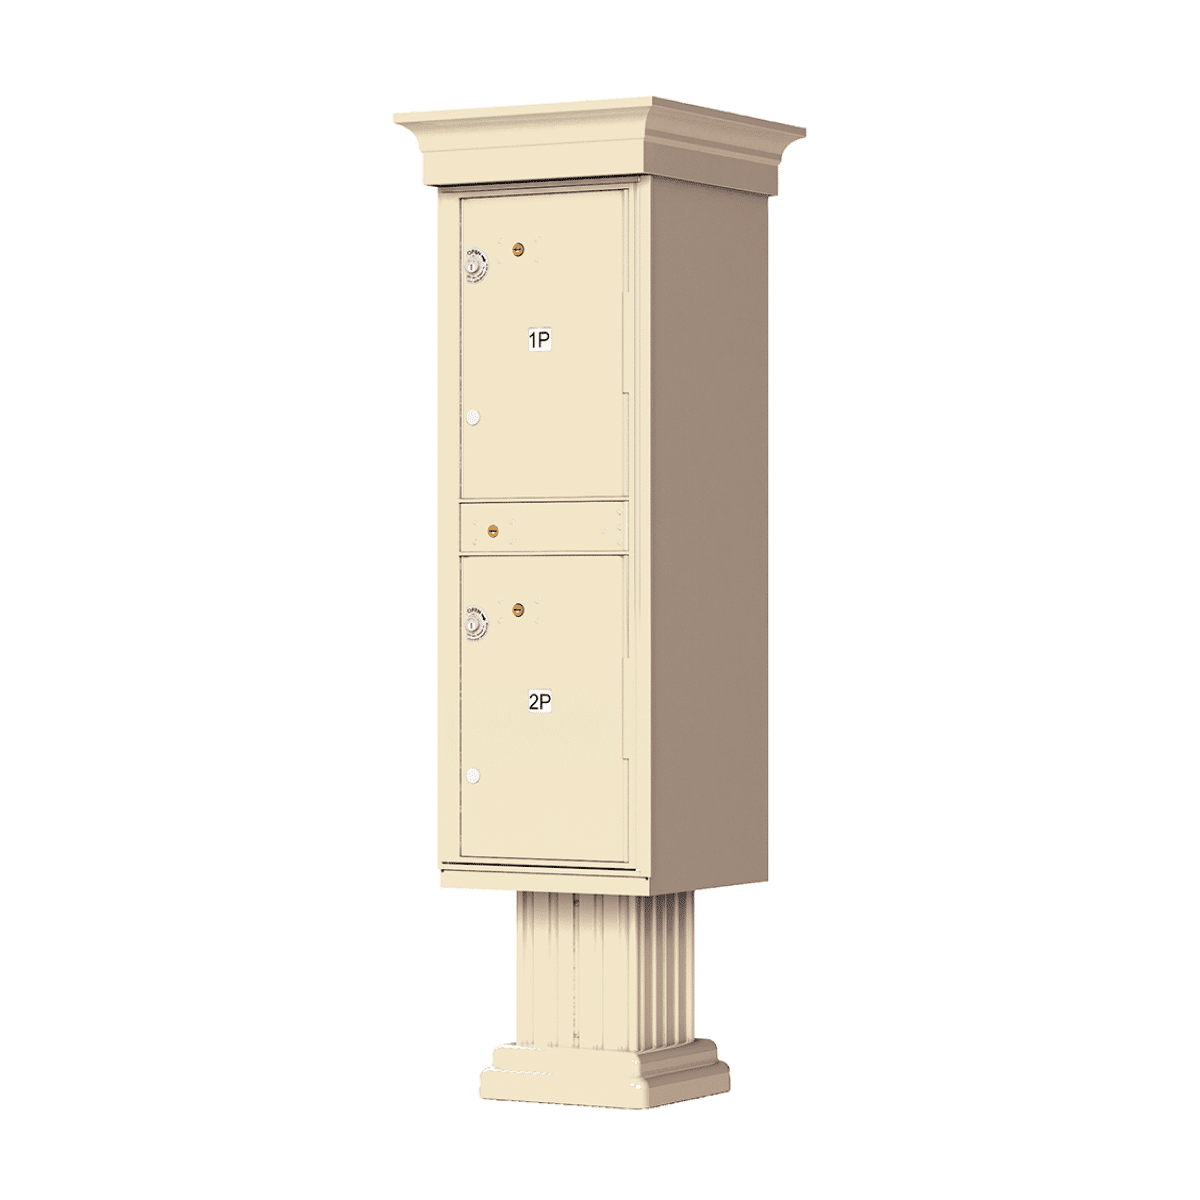 Florence CBU Cluster Mailbox – Vogue Classic Kit, 2 Parcel Lockers Product Image